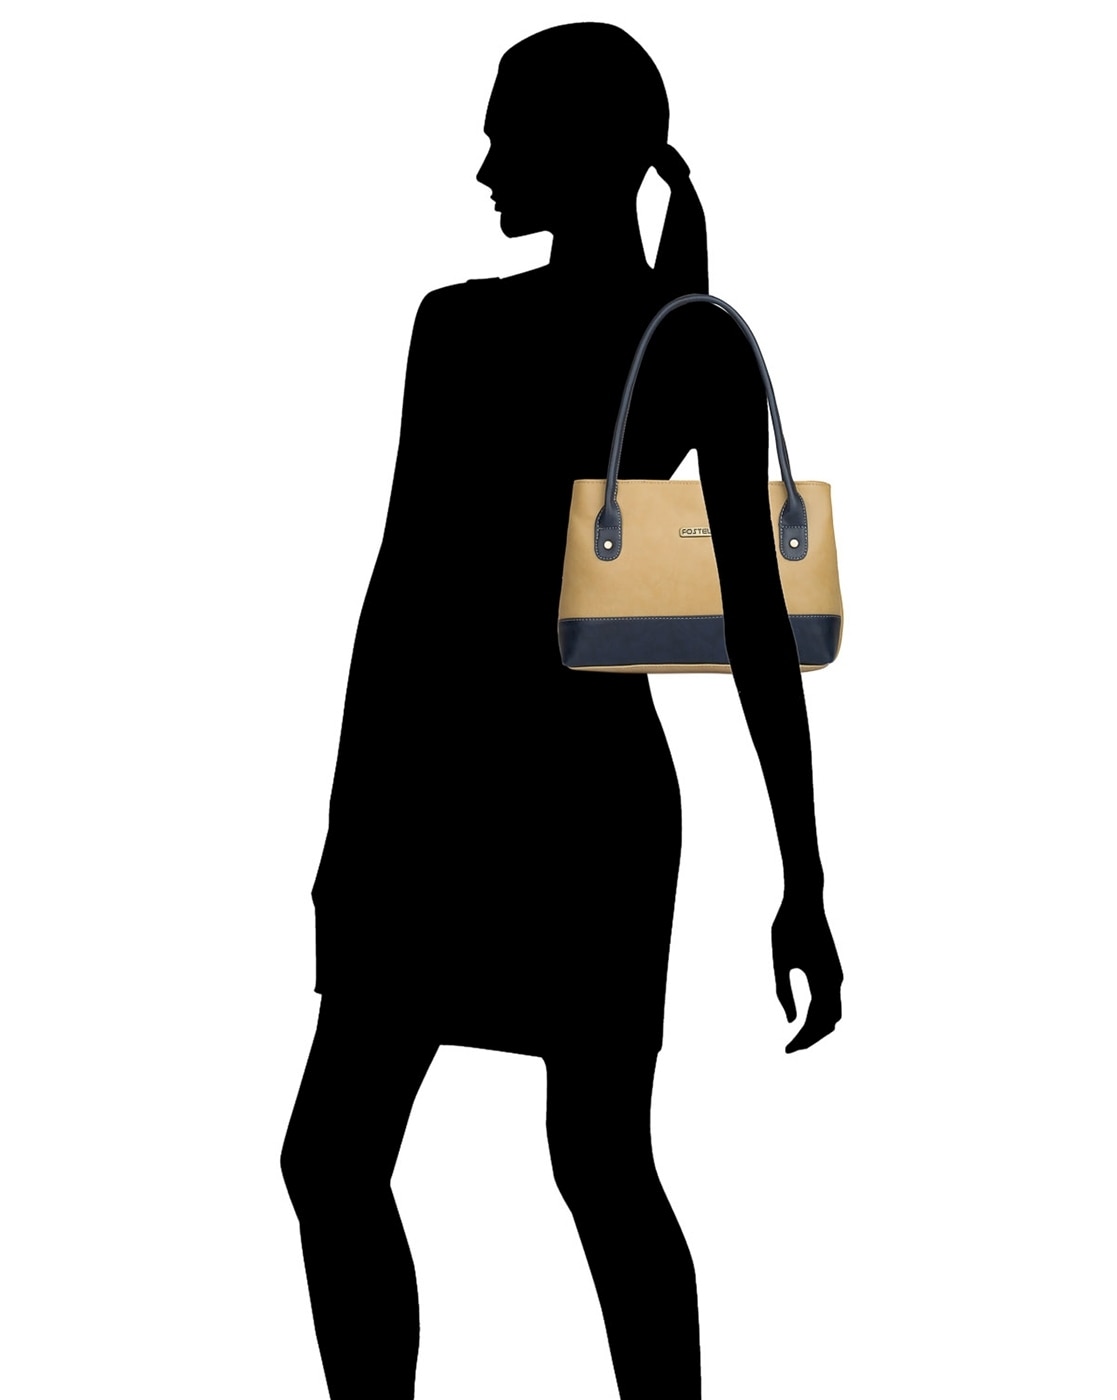 Zara Crossbody Bag is Worth the Hype : r/handbags